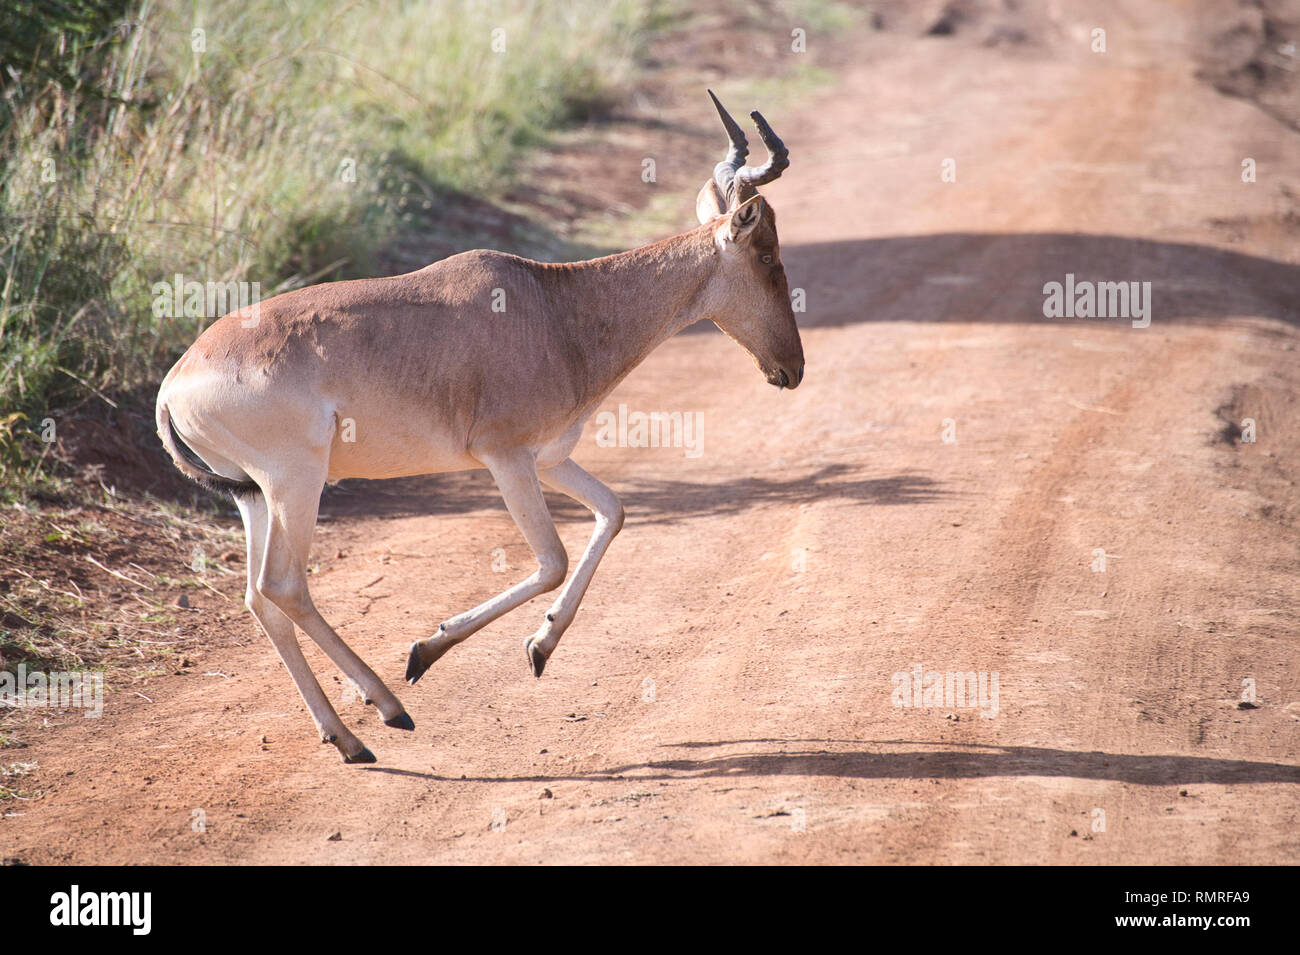 Kongoni oder des Koks hartebeest (Alcelaphus buselaphus), Nairobi National Park, Kenia. Stockfoto